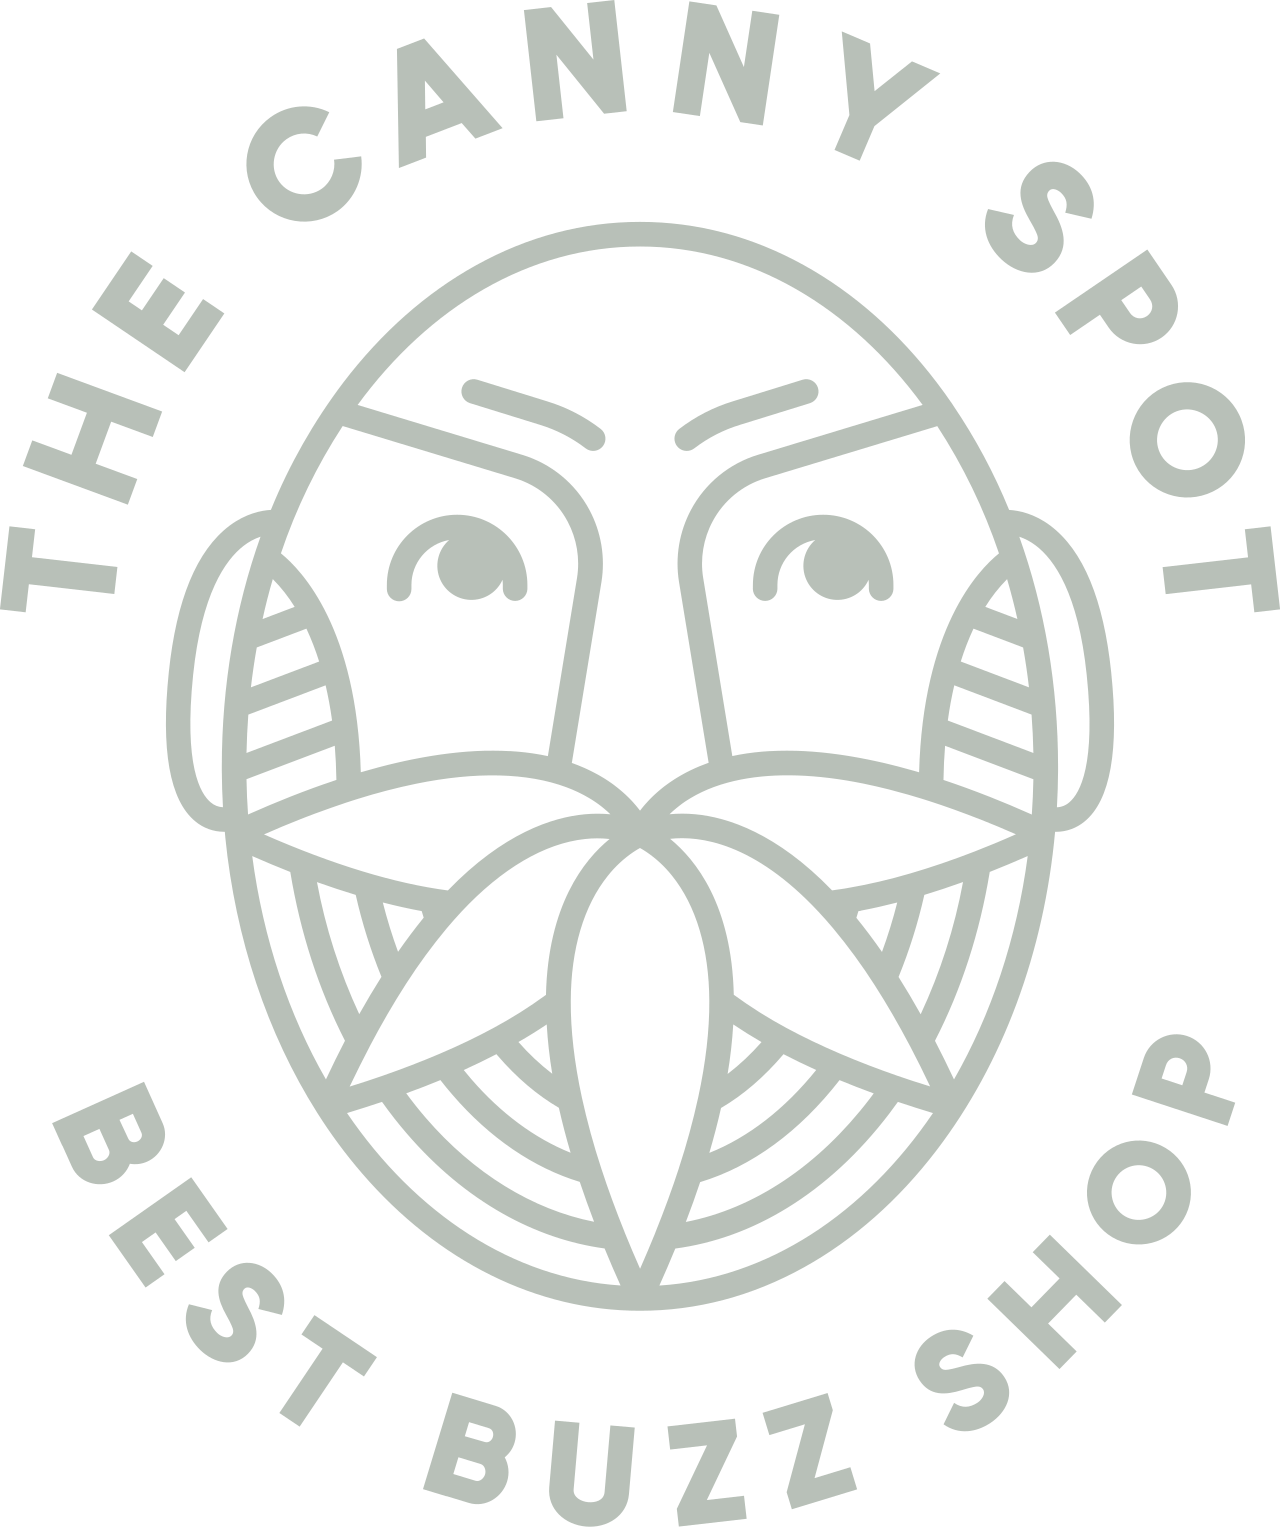 The Canny Spot's logo